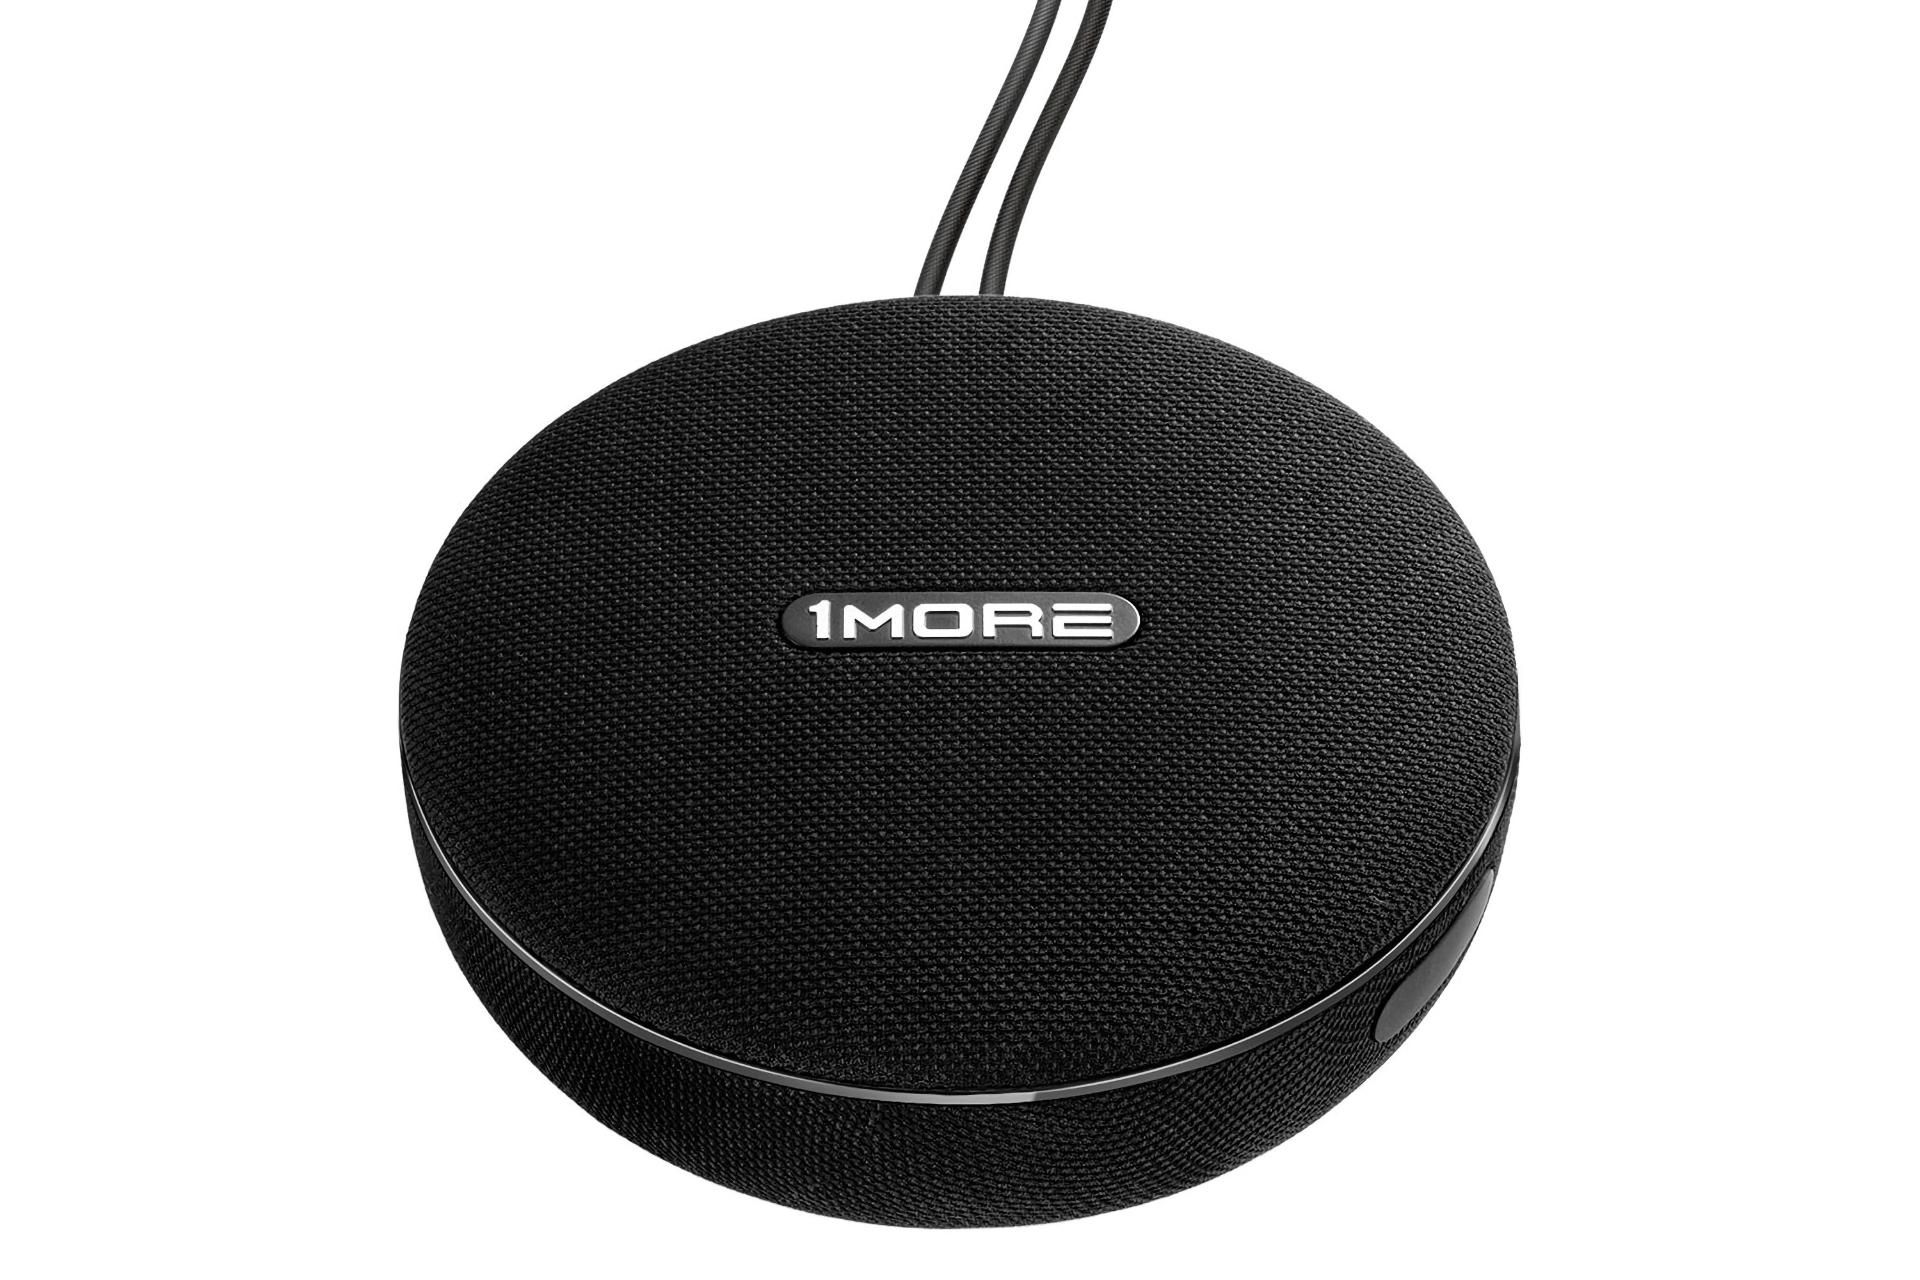 نمای بالا اسپیکر وان مور 1MORE Portable Bluetooth Speaker S1001BT